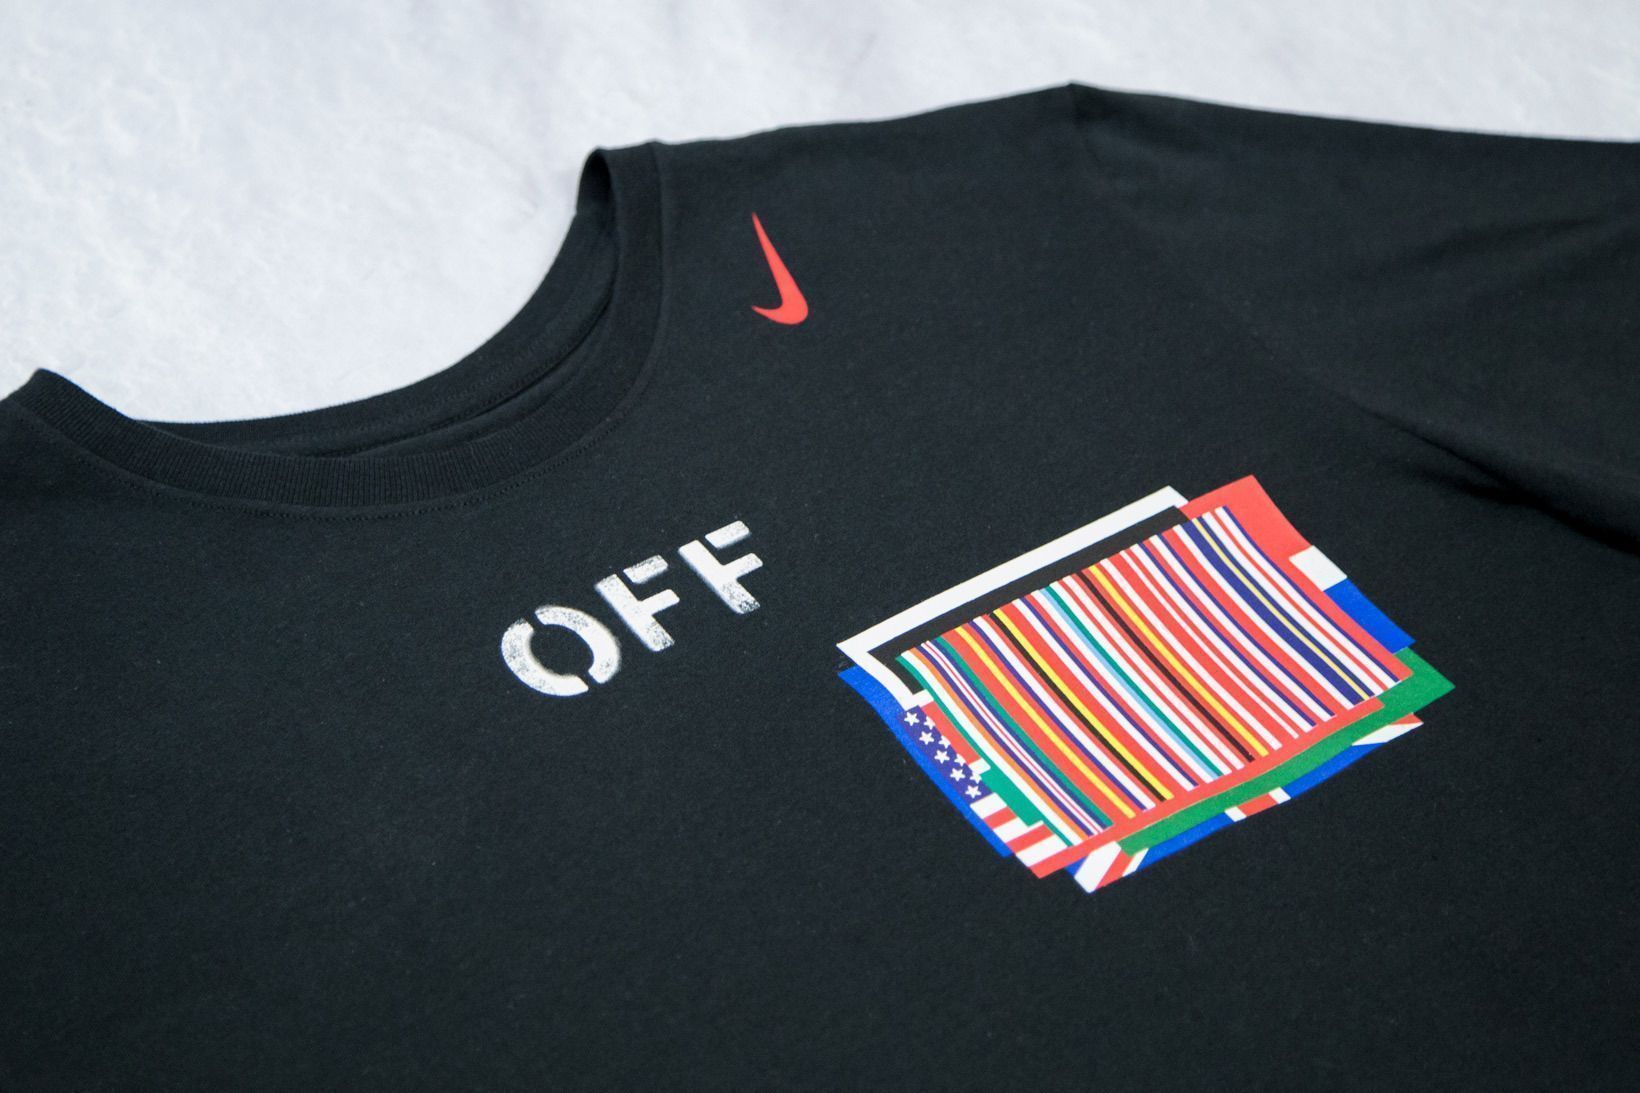 Off White x Nike - Equality Tee